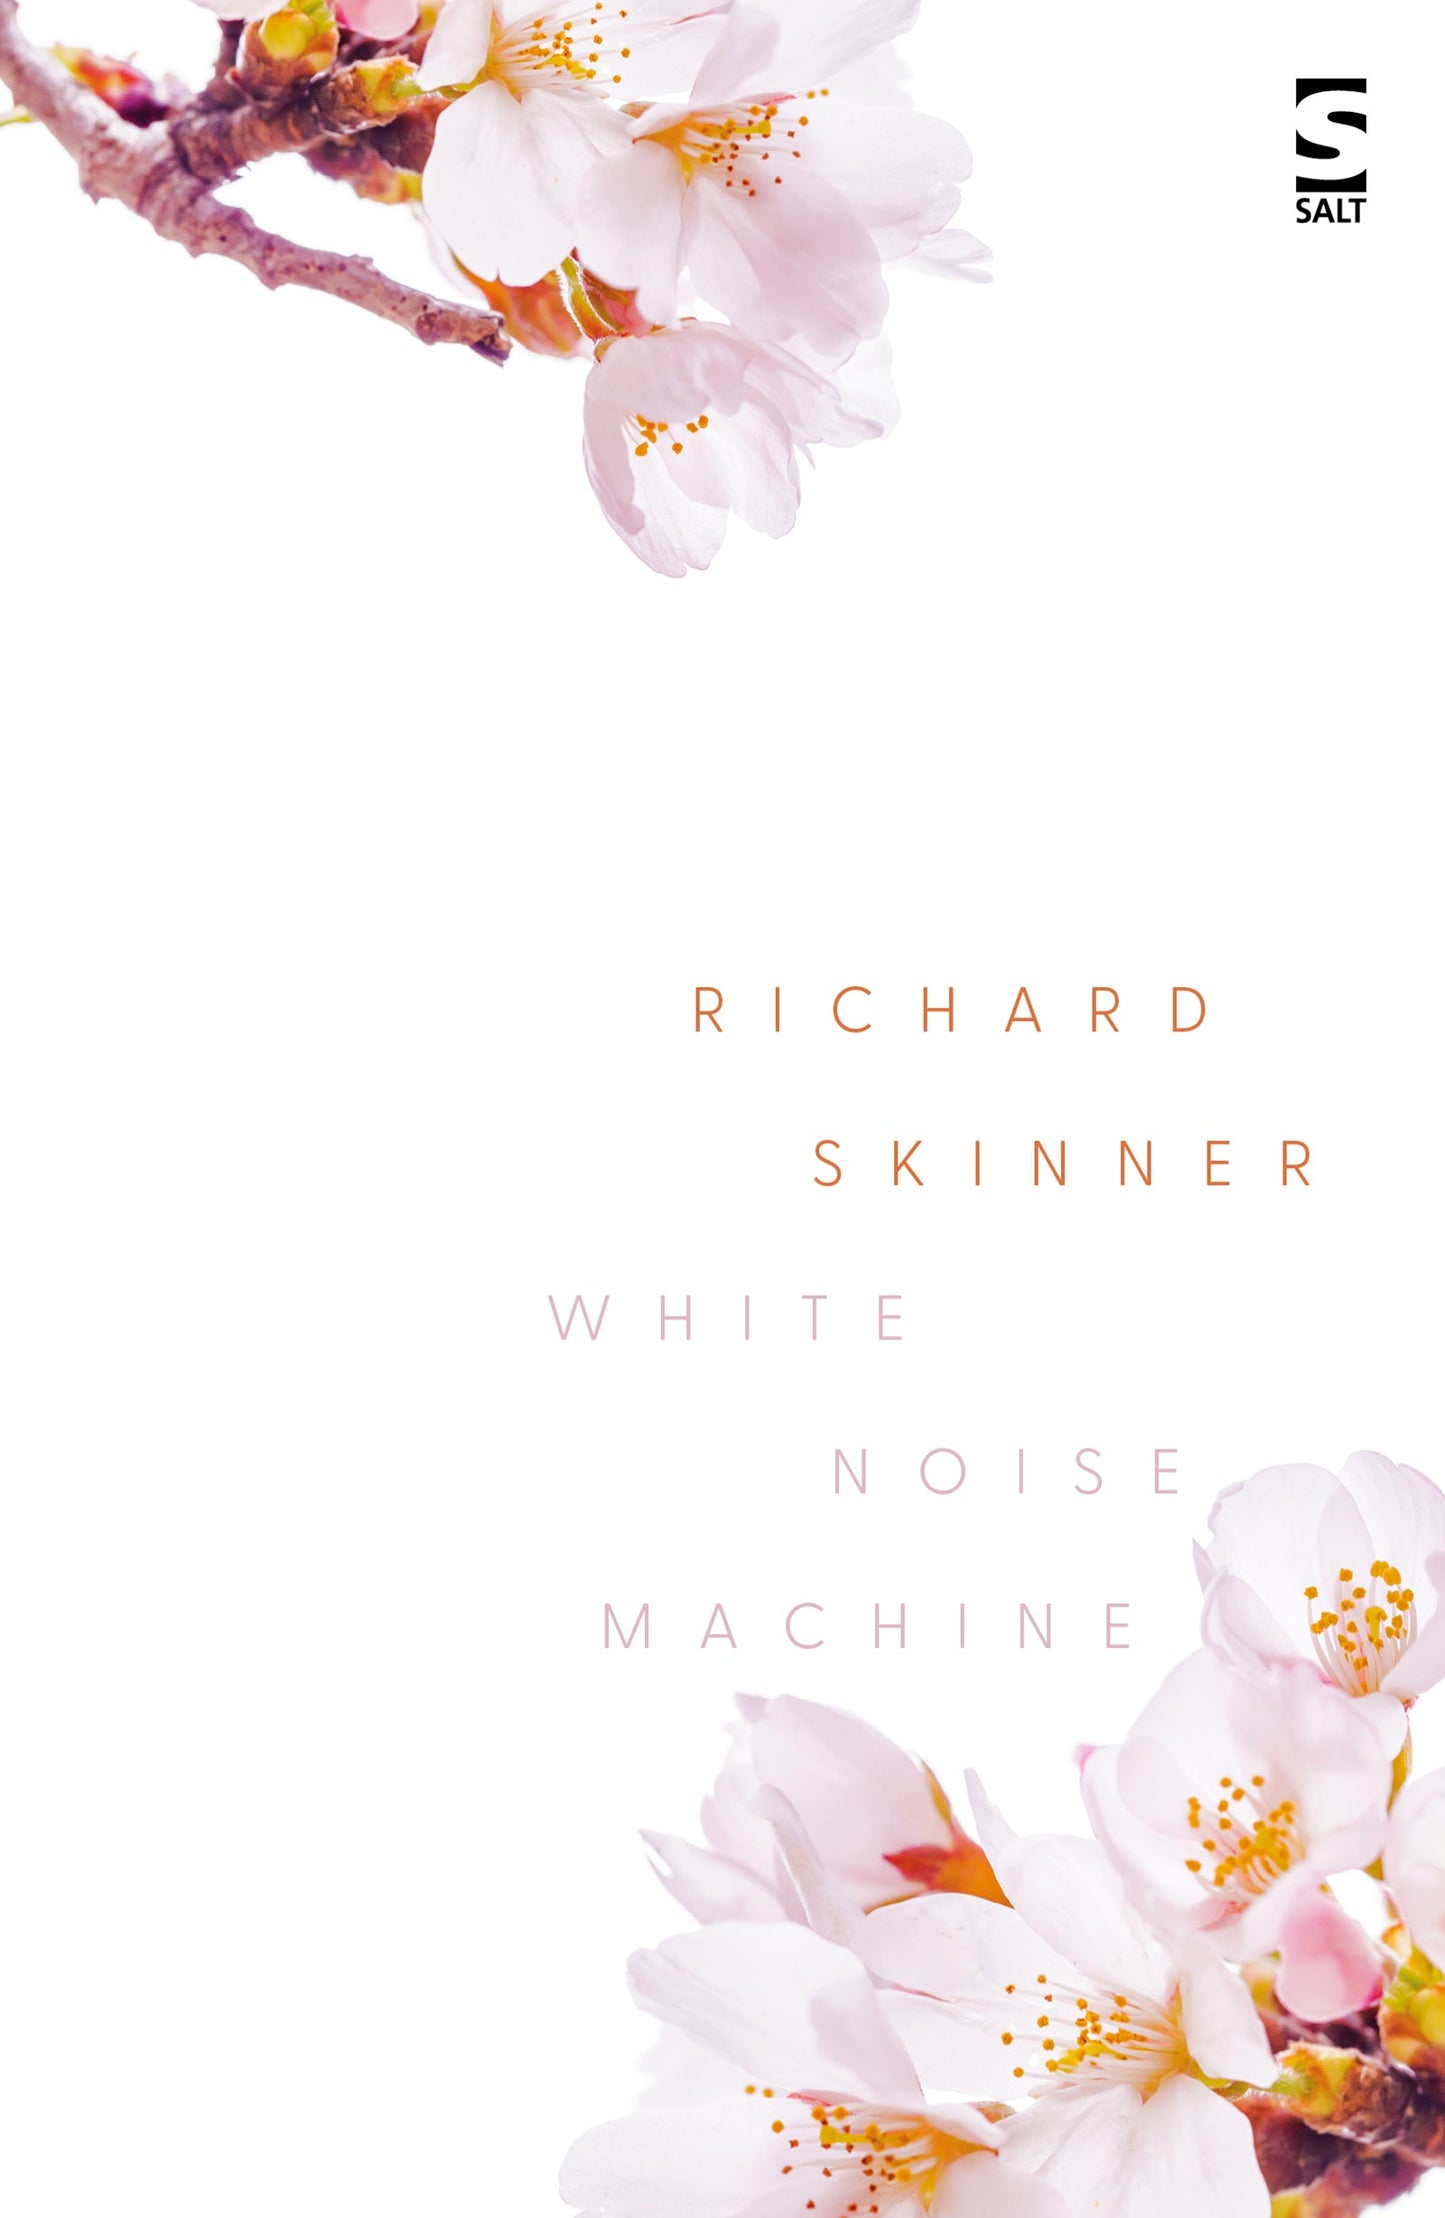 White Noise Machine by Richard Skinner